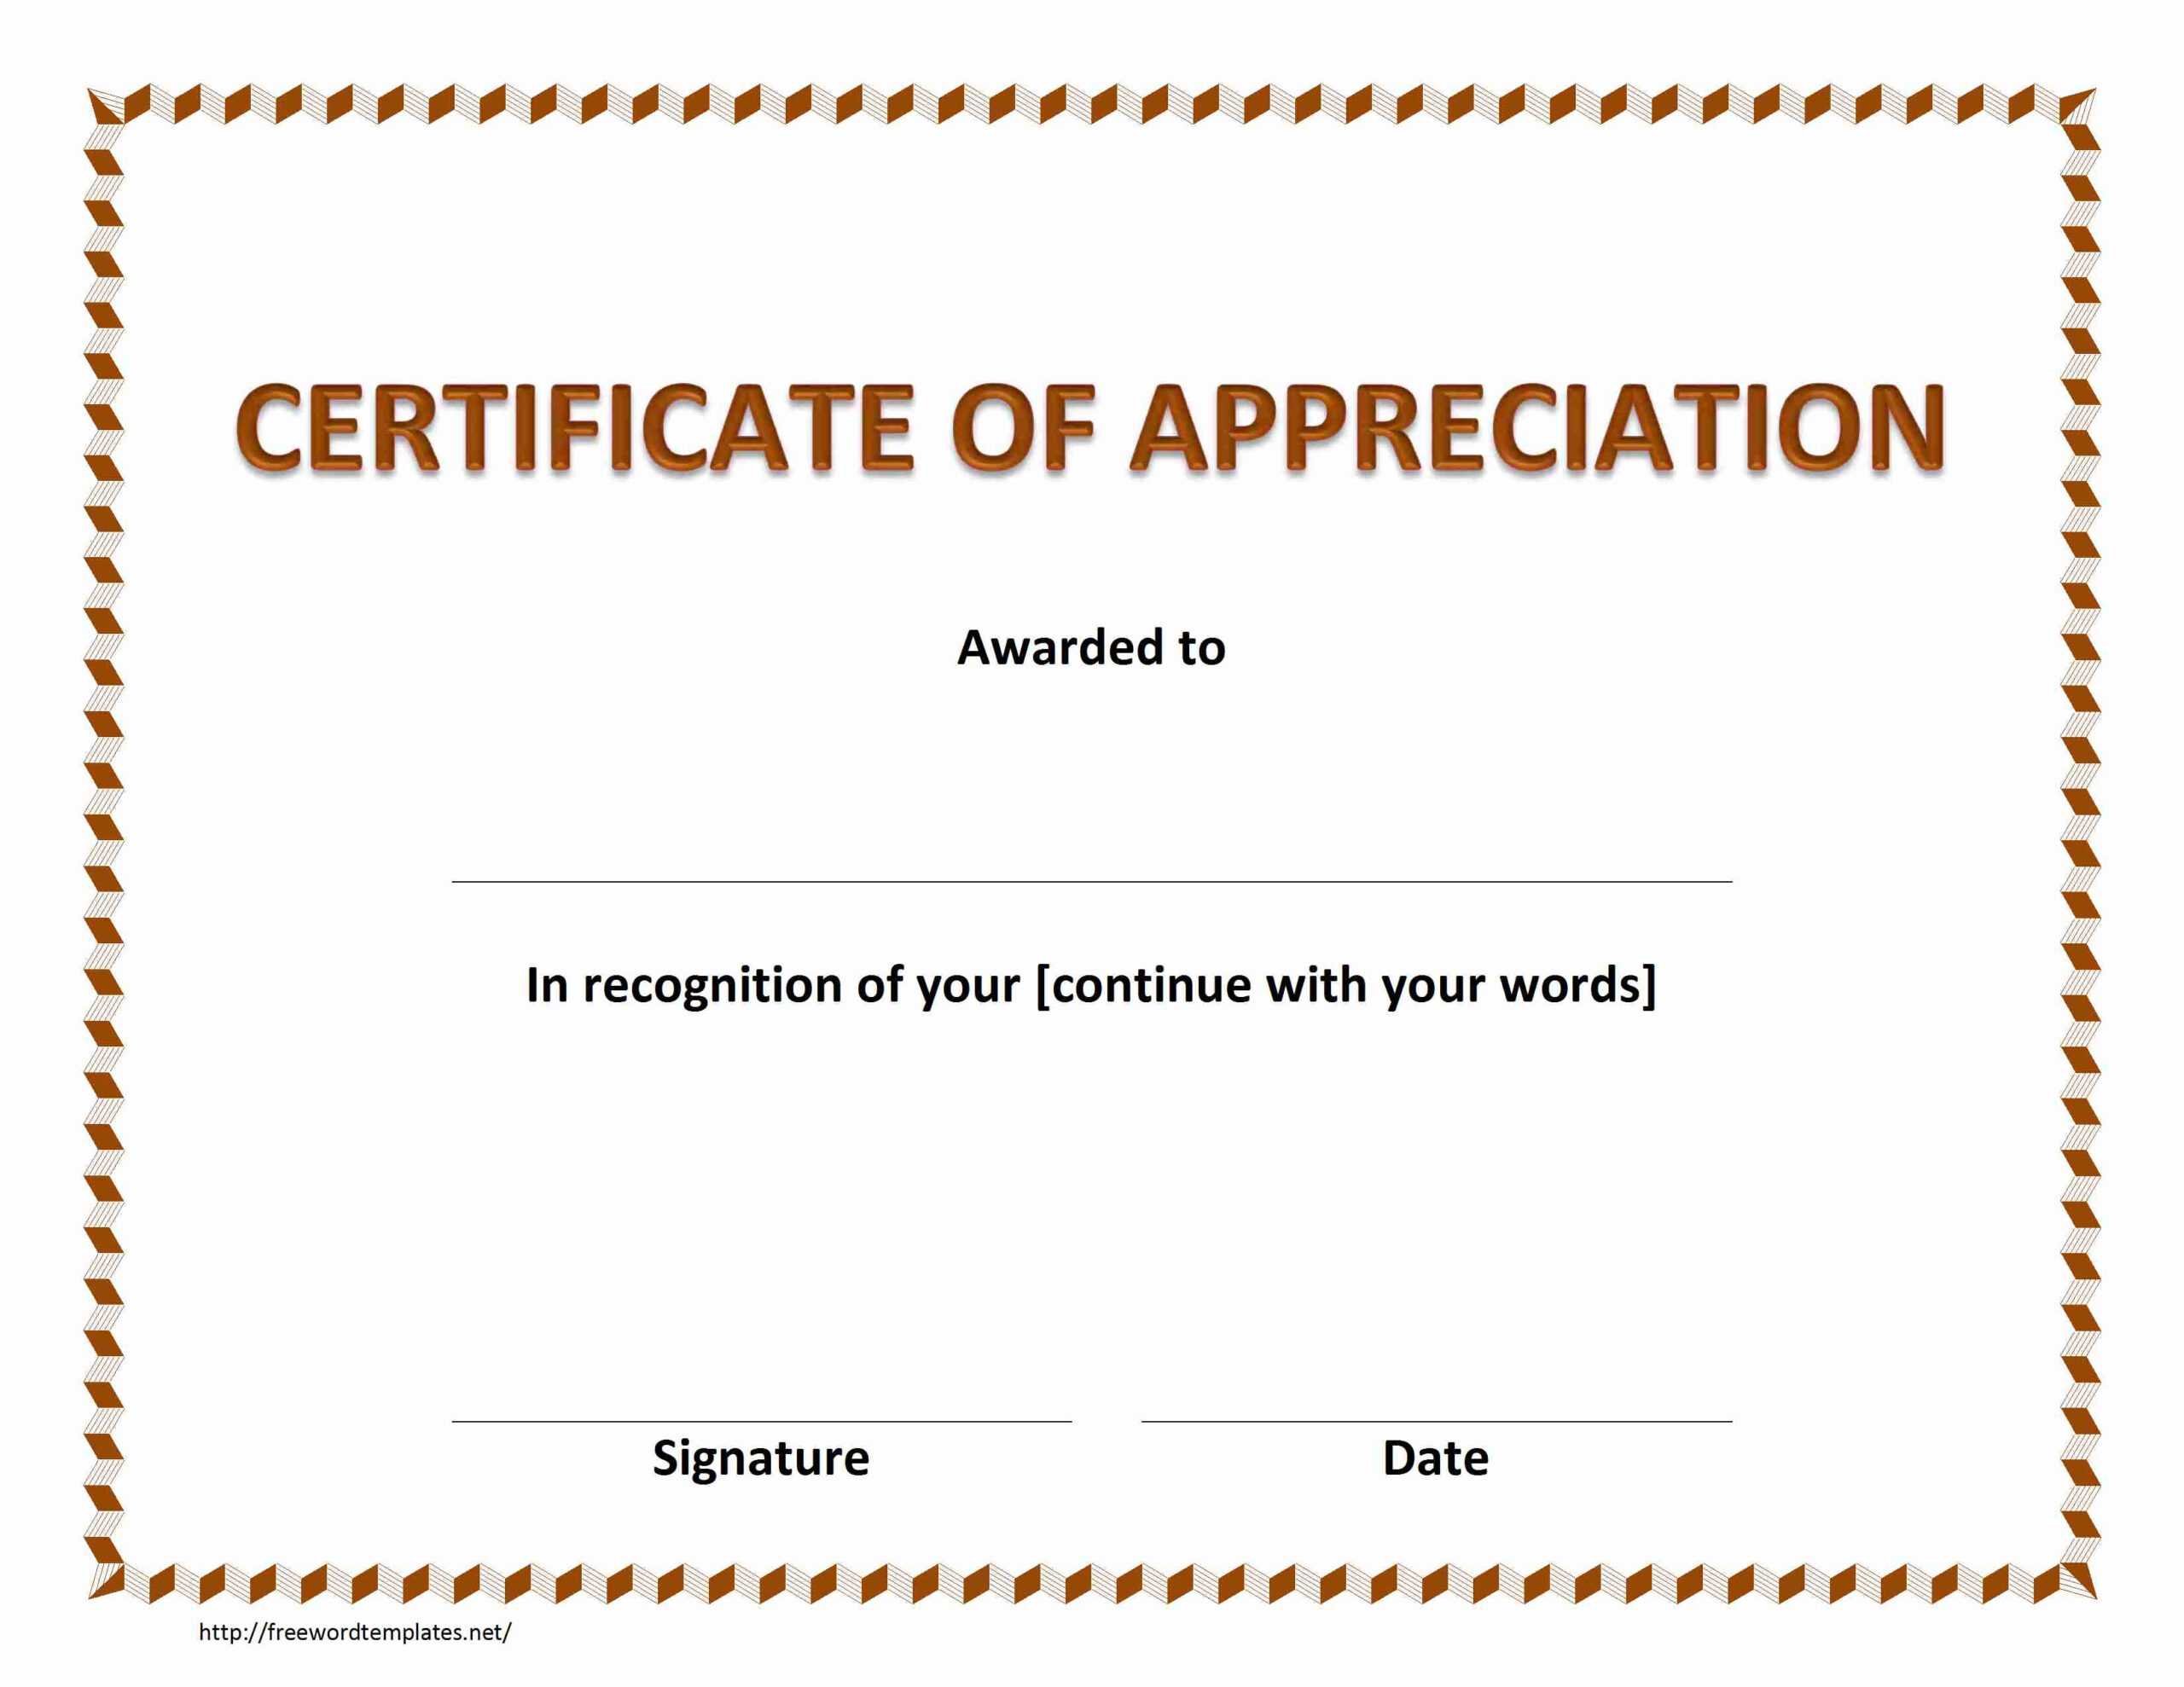 Certificate Of Appreciation Docs In Certificate Of Appreciation Template Doc